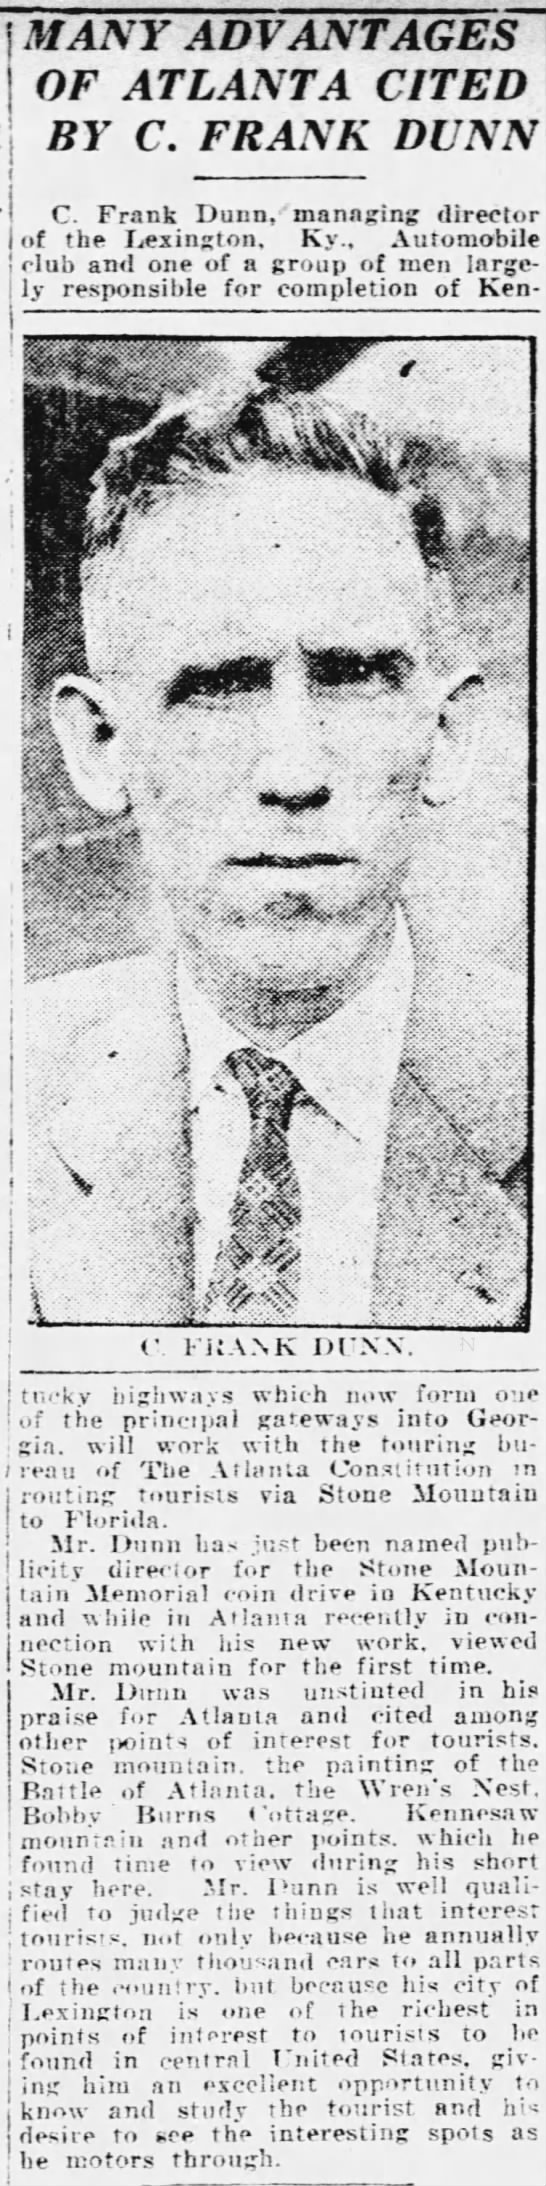 Mr Frank C Dunn Publicity Director - 